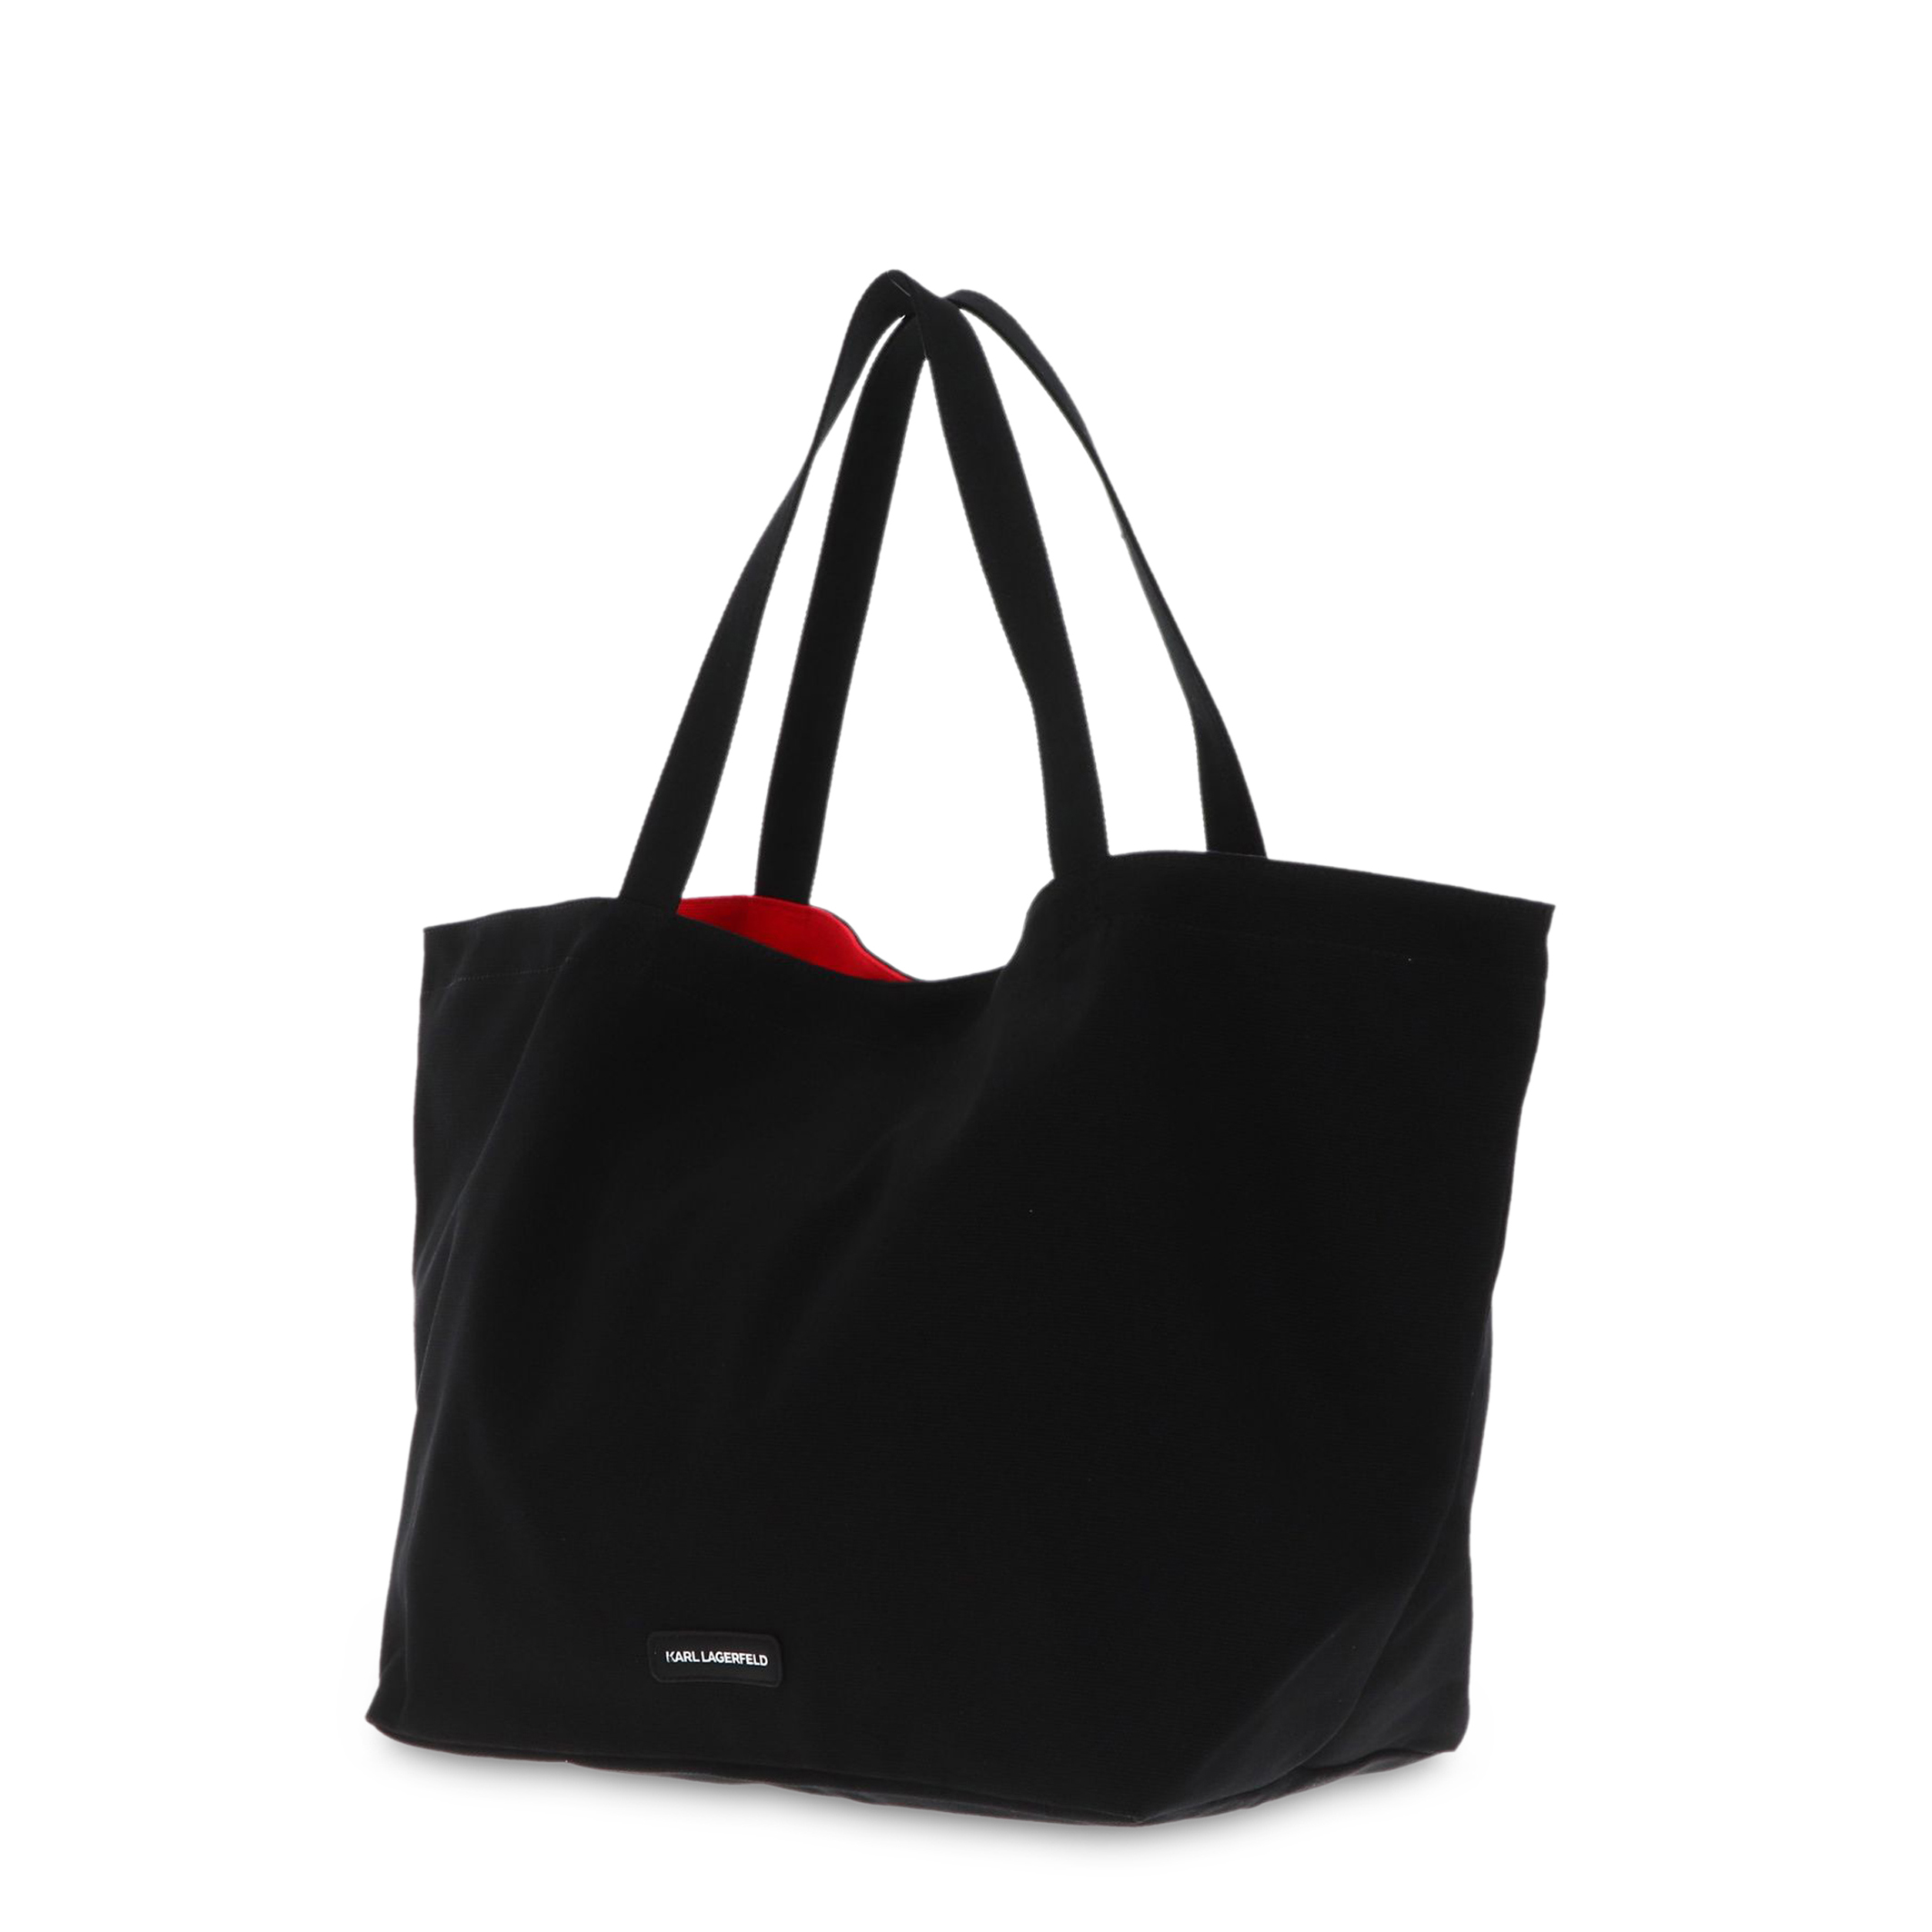 Karl Lagerfeld Black Shopping bags for Women - 201W3138